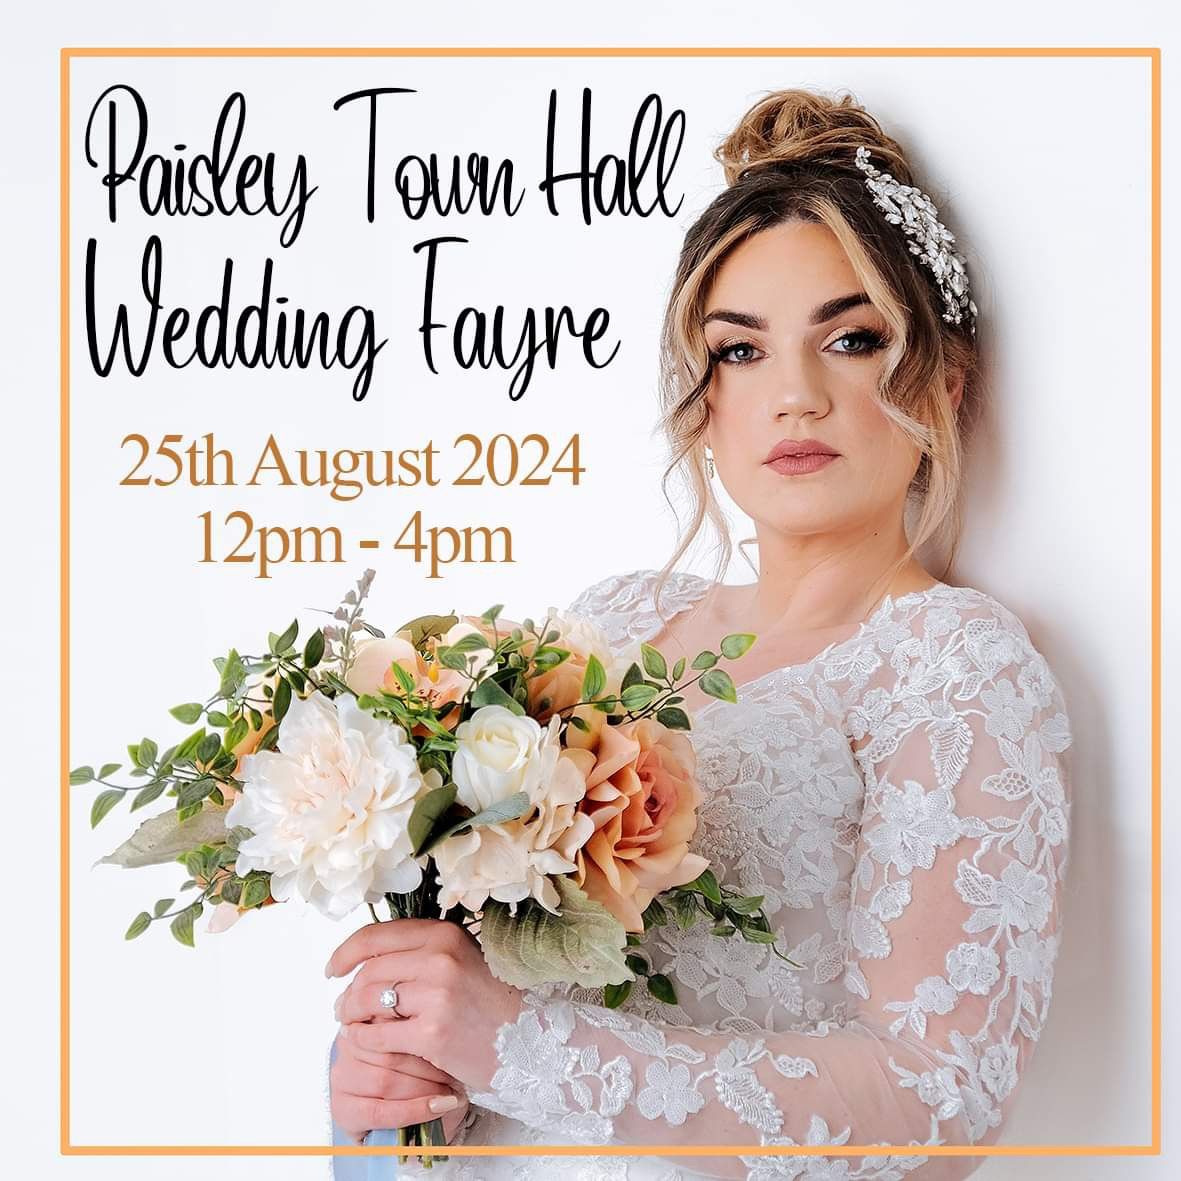 Paisley Town Hall Wedding Fayre